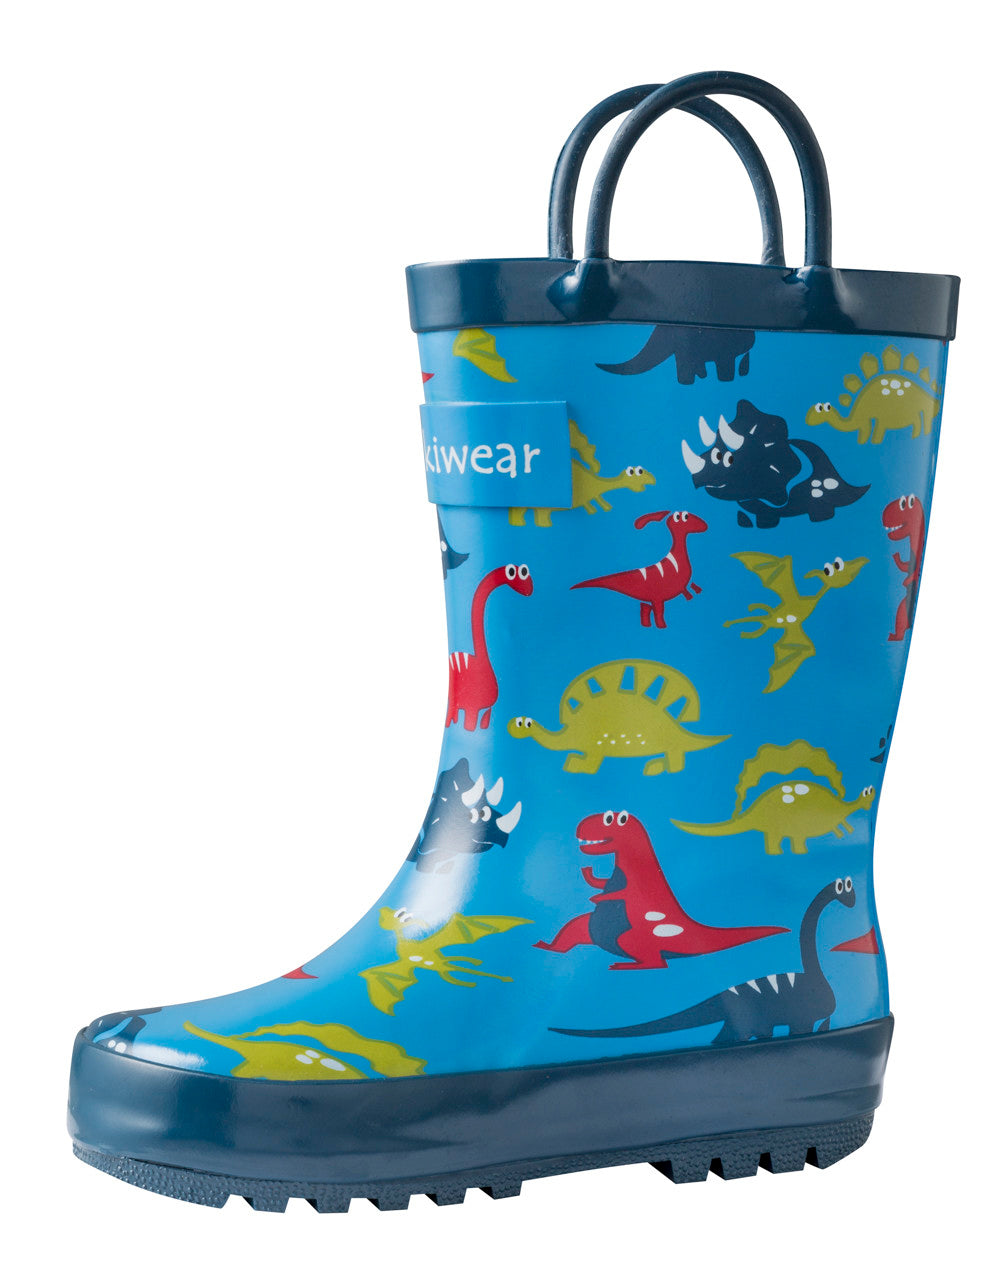 Children's Rubber Rain Boots, Blue 